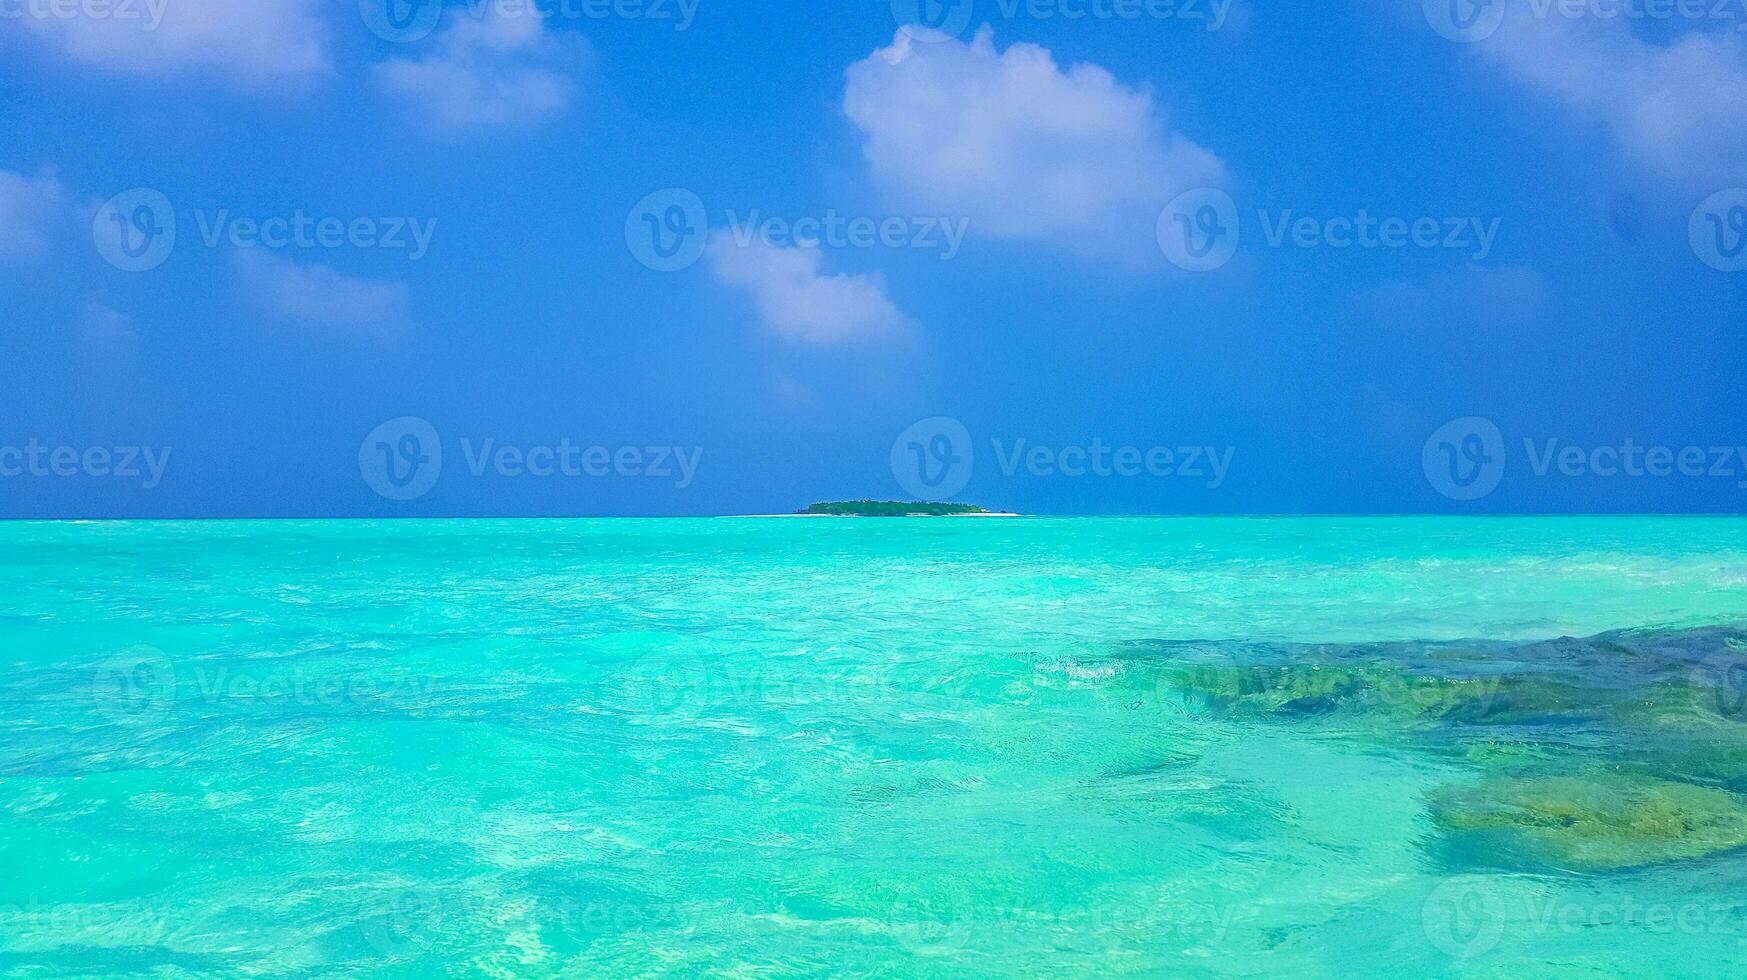 îles de banc de sable turquoise tropicales naturelles madivaru finolhu atoll rasdhoo maldives. photo